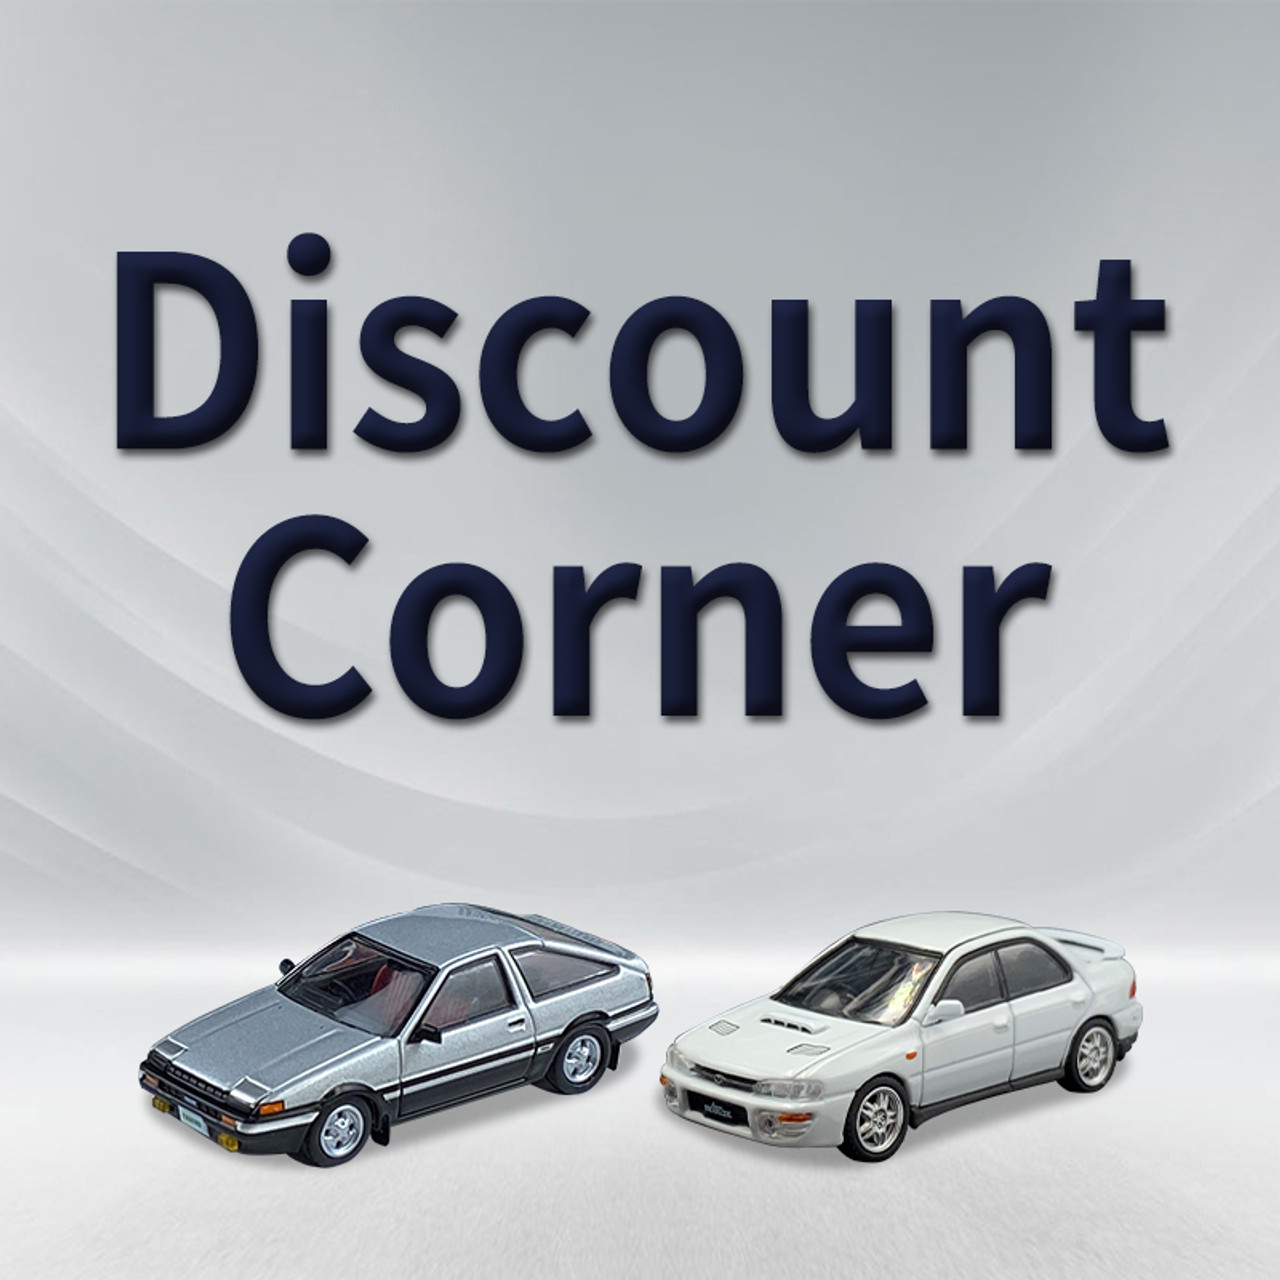 Discount Corner